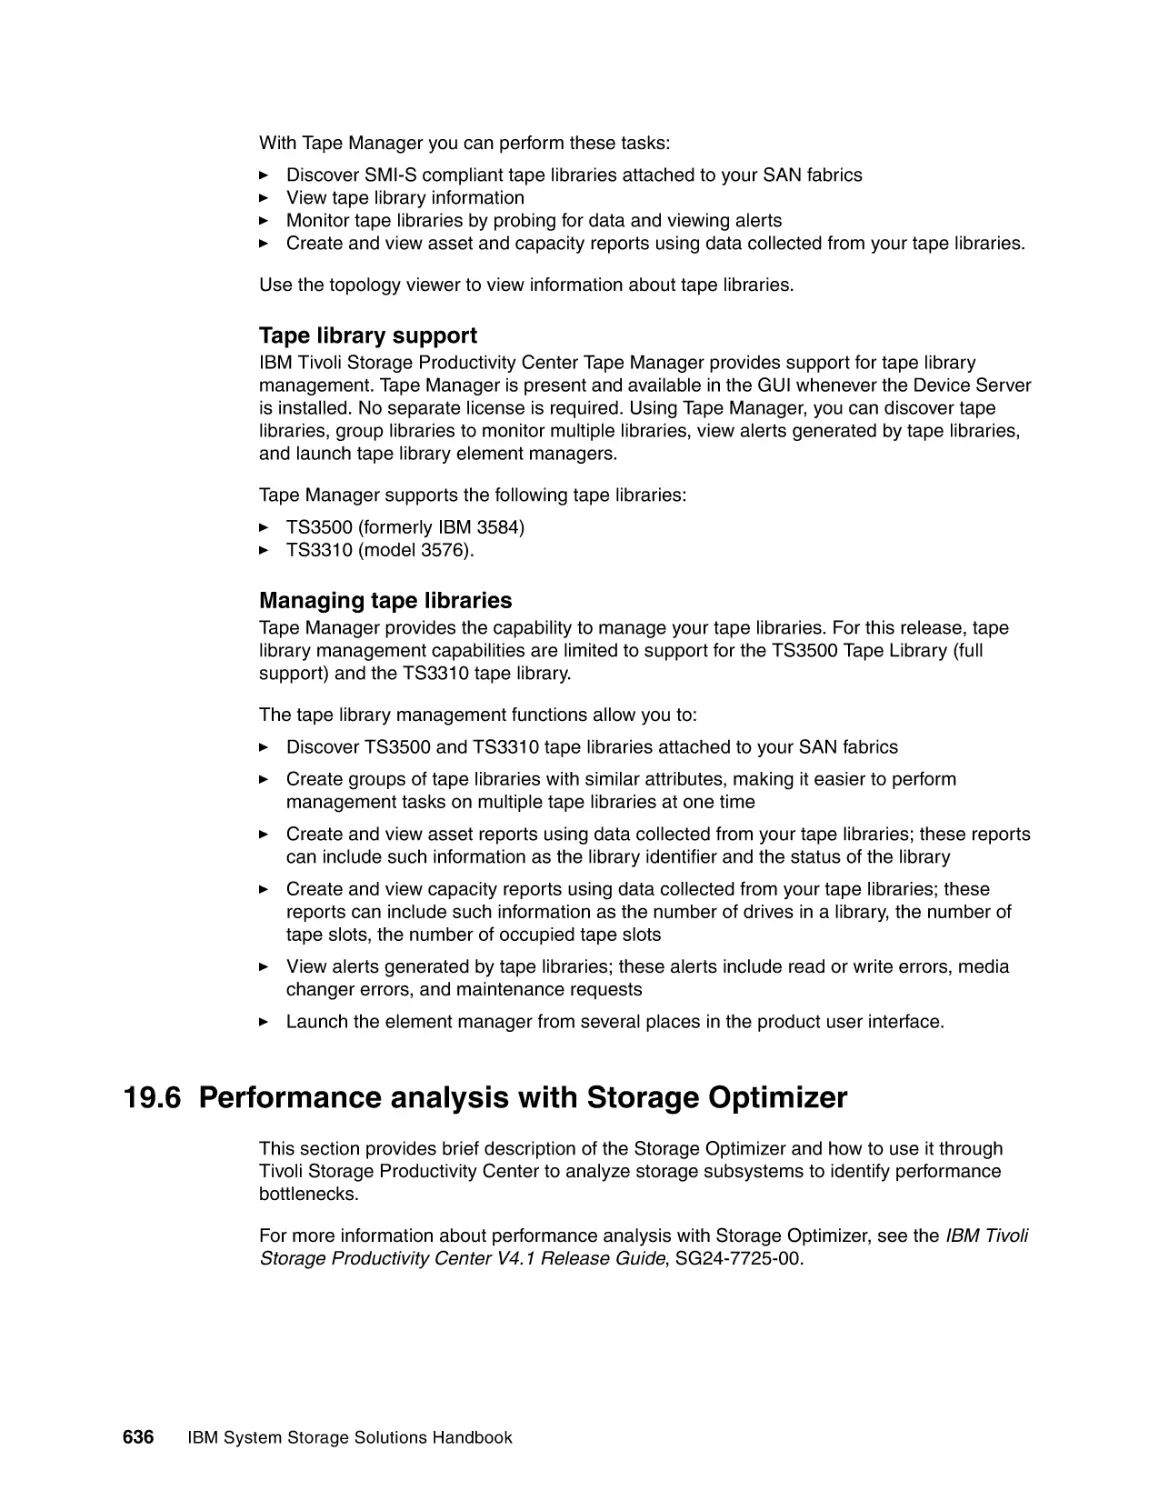 19.6 Performance analysis with Storage Optimizer